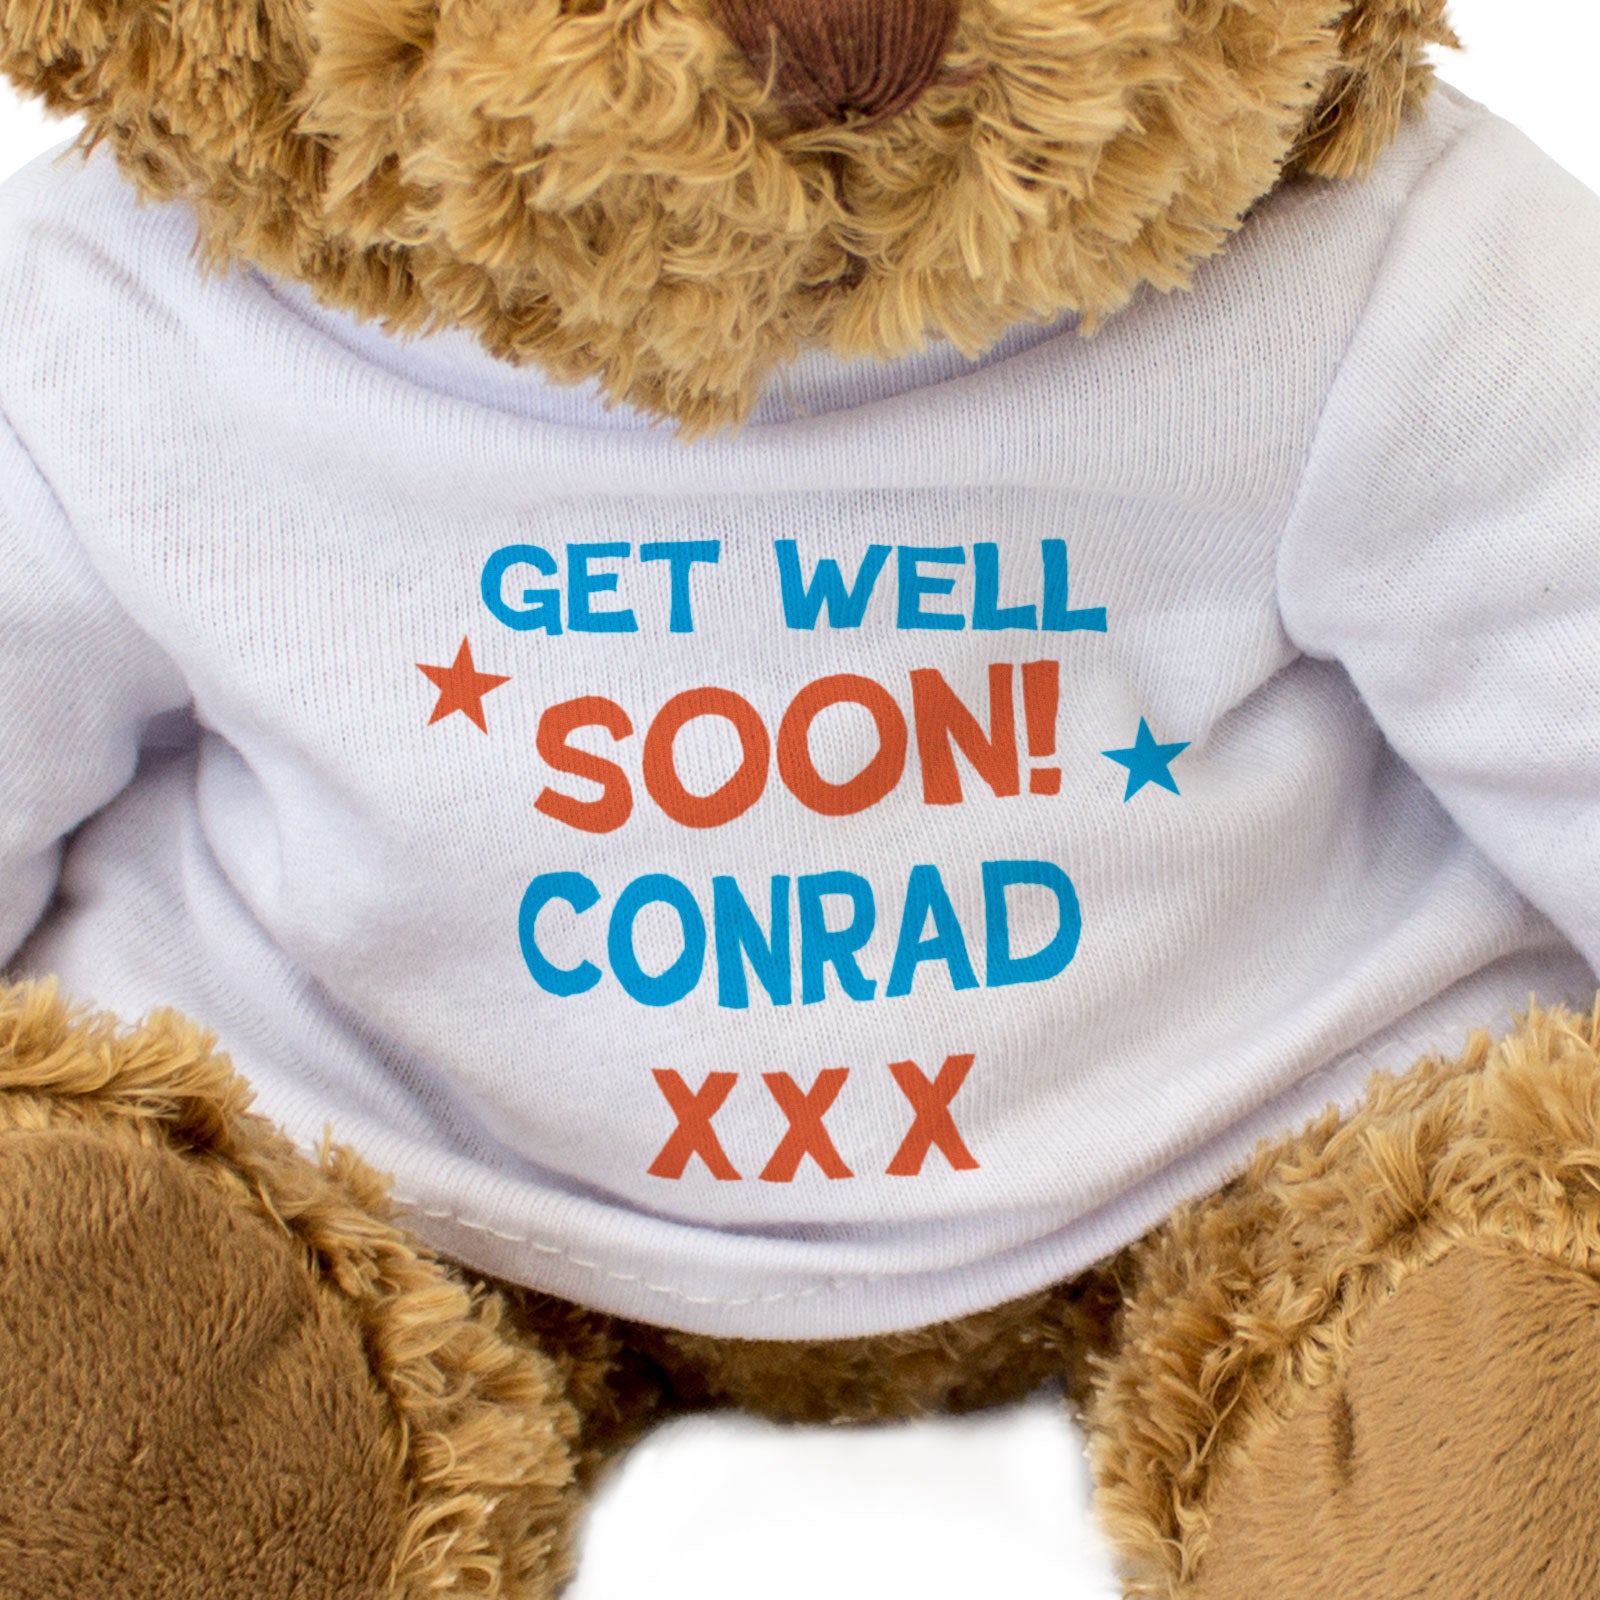 Get Well Soon Conrad - Teddy Bear